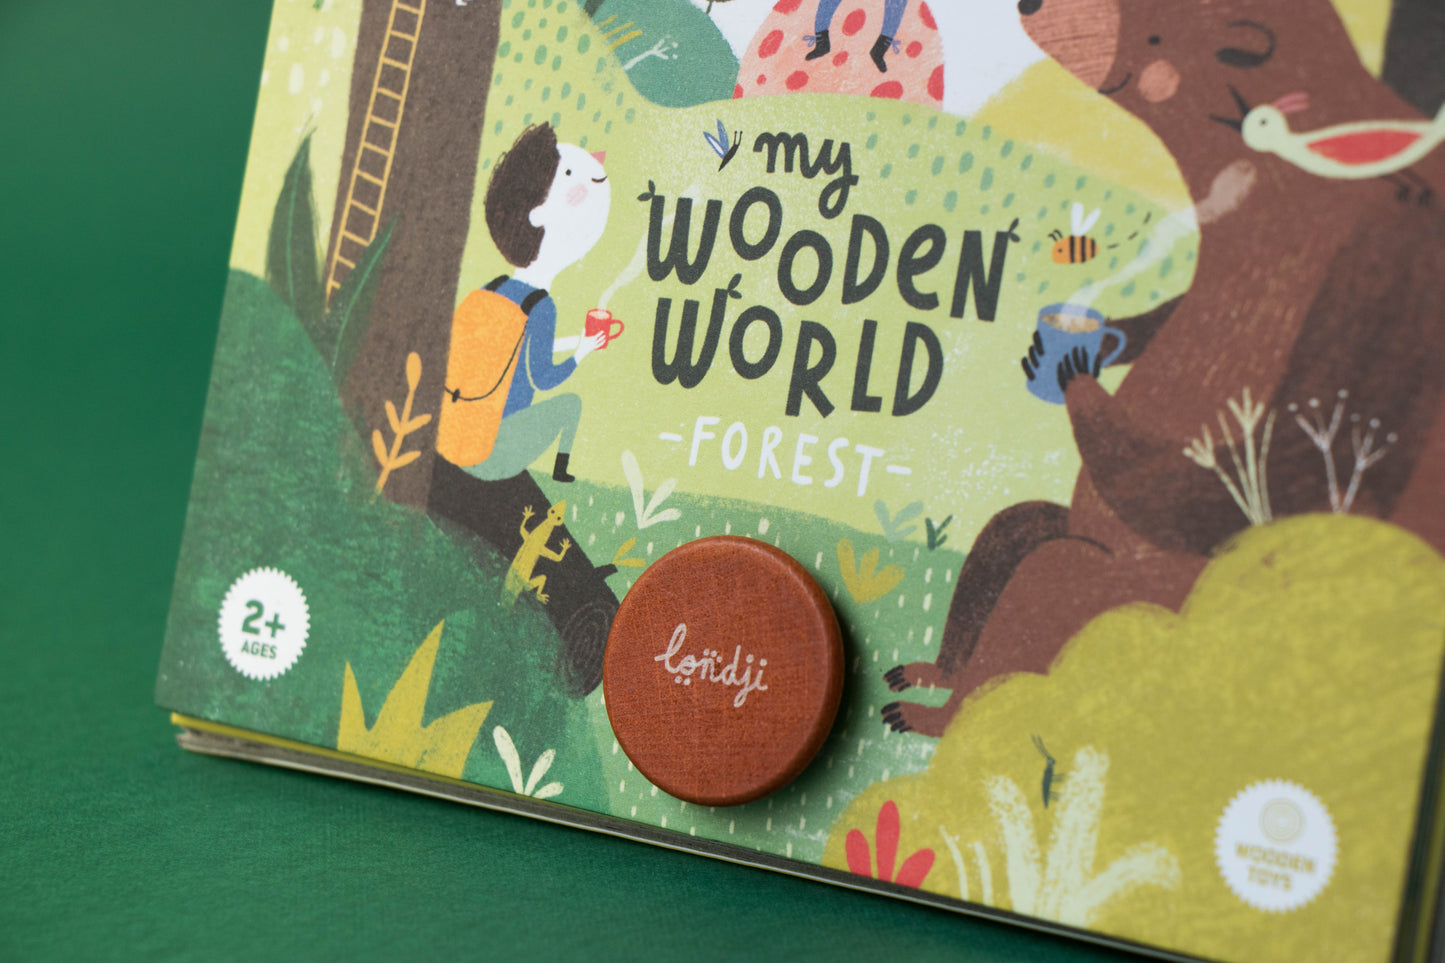 Londji - My wooden world forest